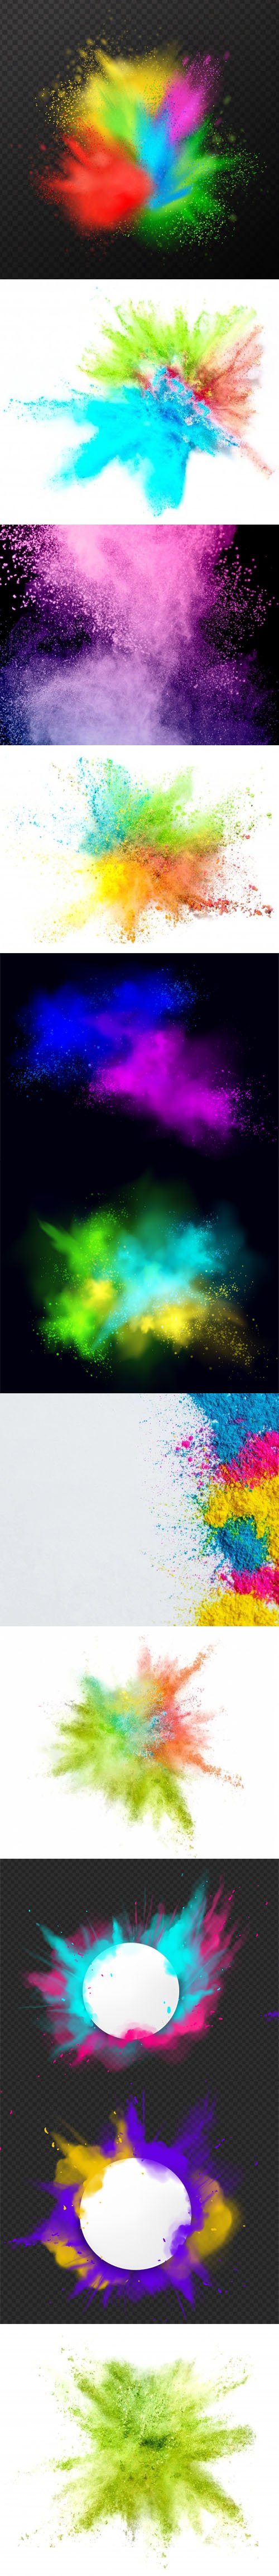 Amazing Paint & Powder Explosions Vector Design Templates